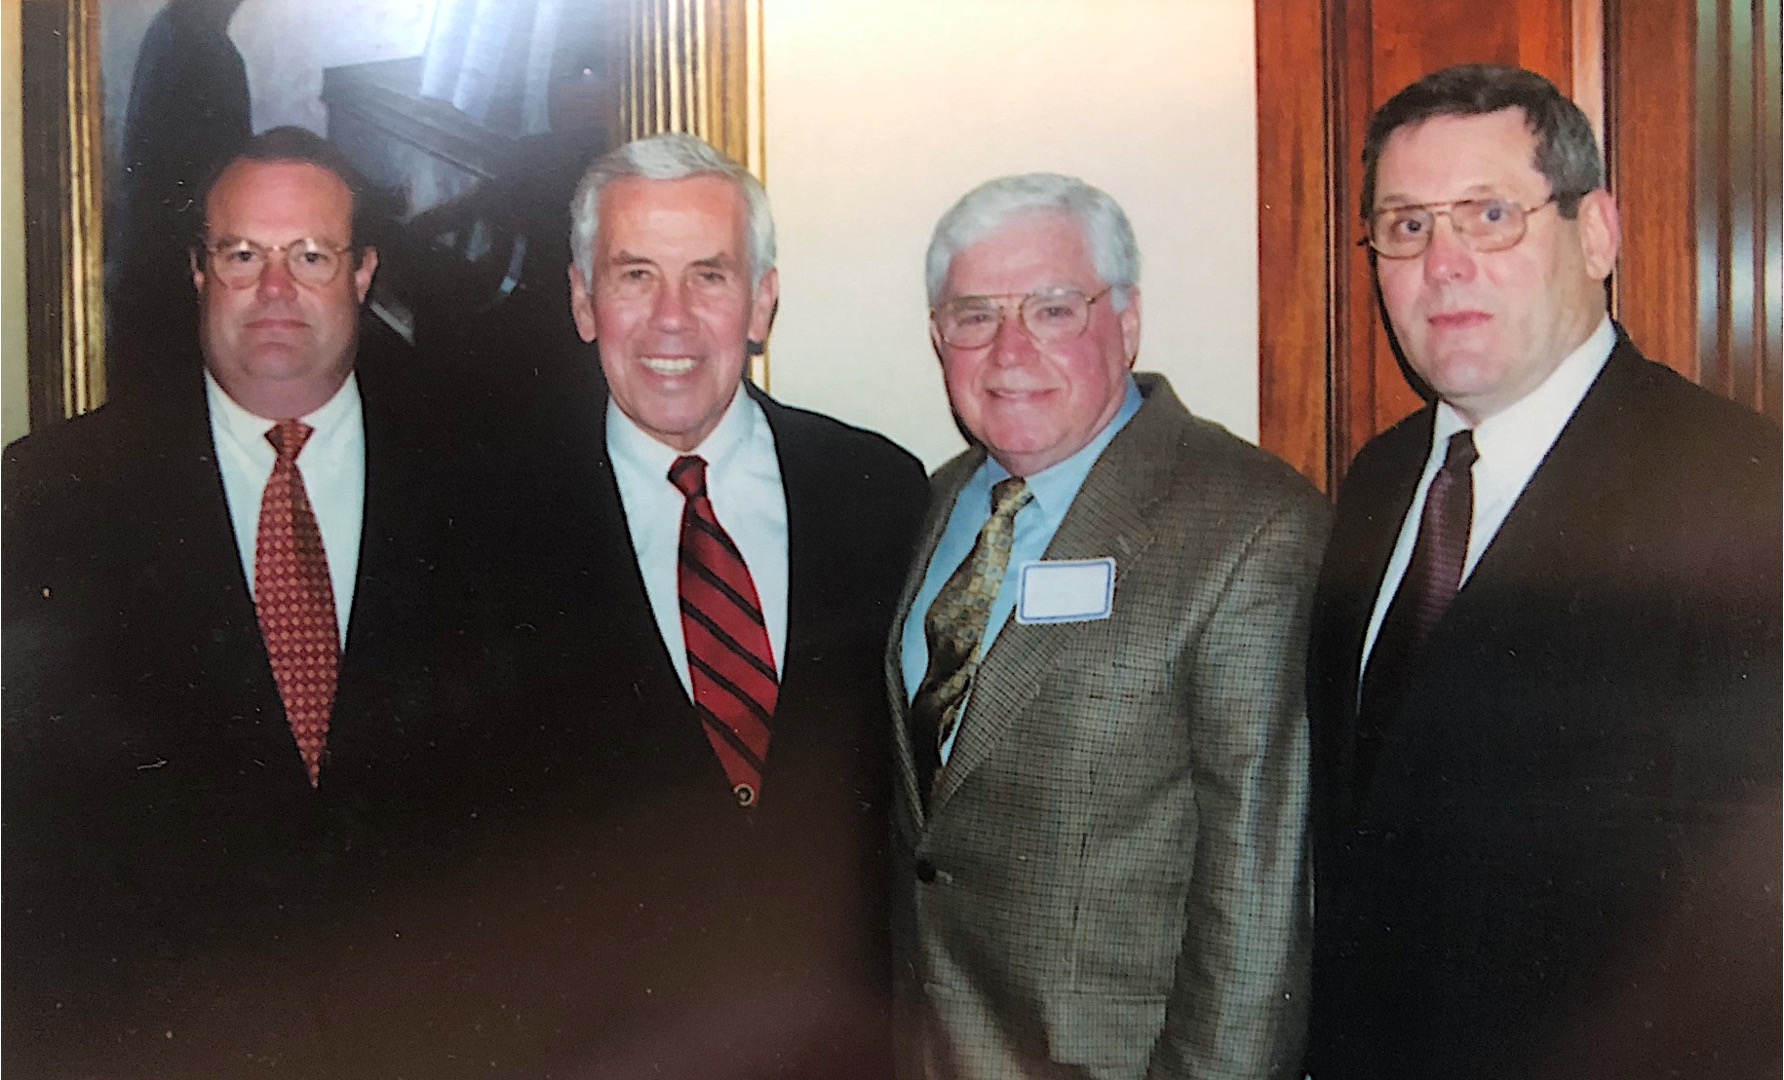 From left, HTIRC Director Charles Michler, Senator Richard Lugar, Bob Burke, and Purdue University FNR Department Head Dennis LeMaster at an HTIRC event in 1999.